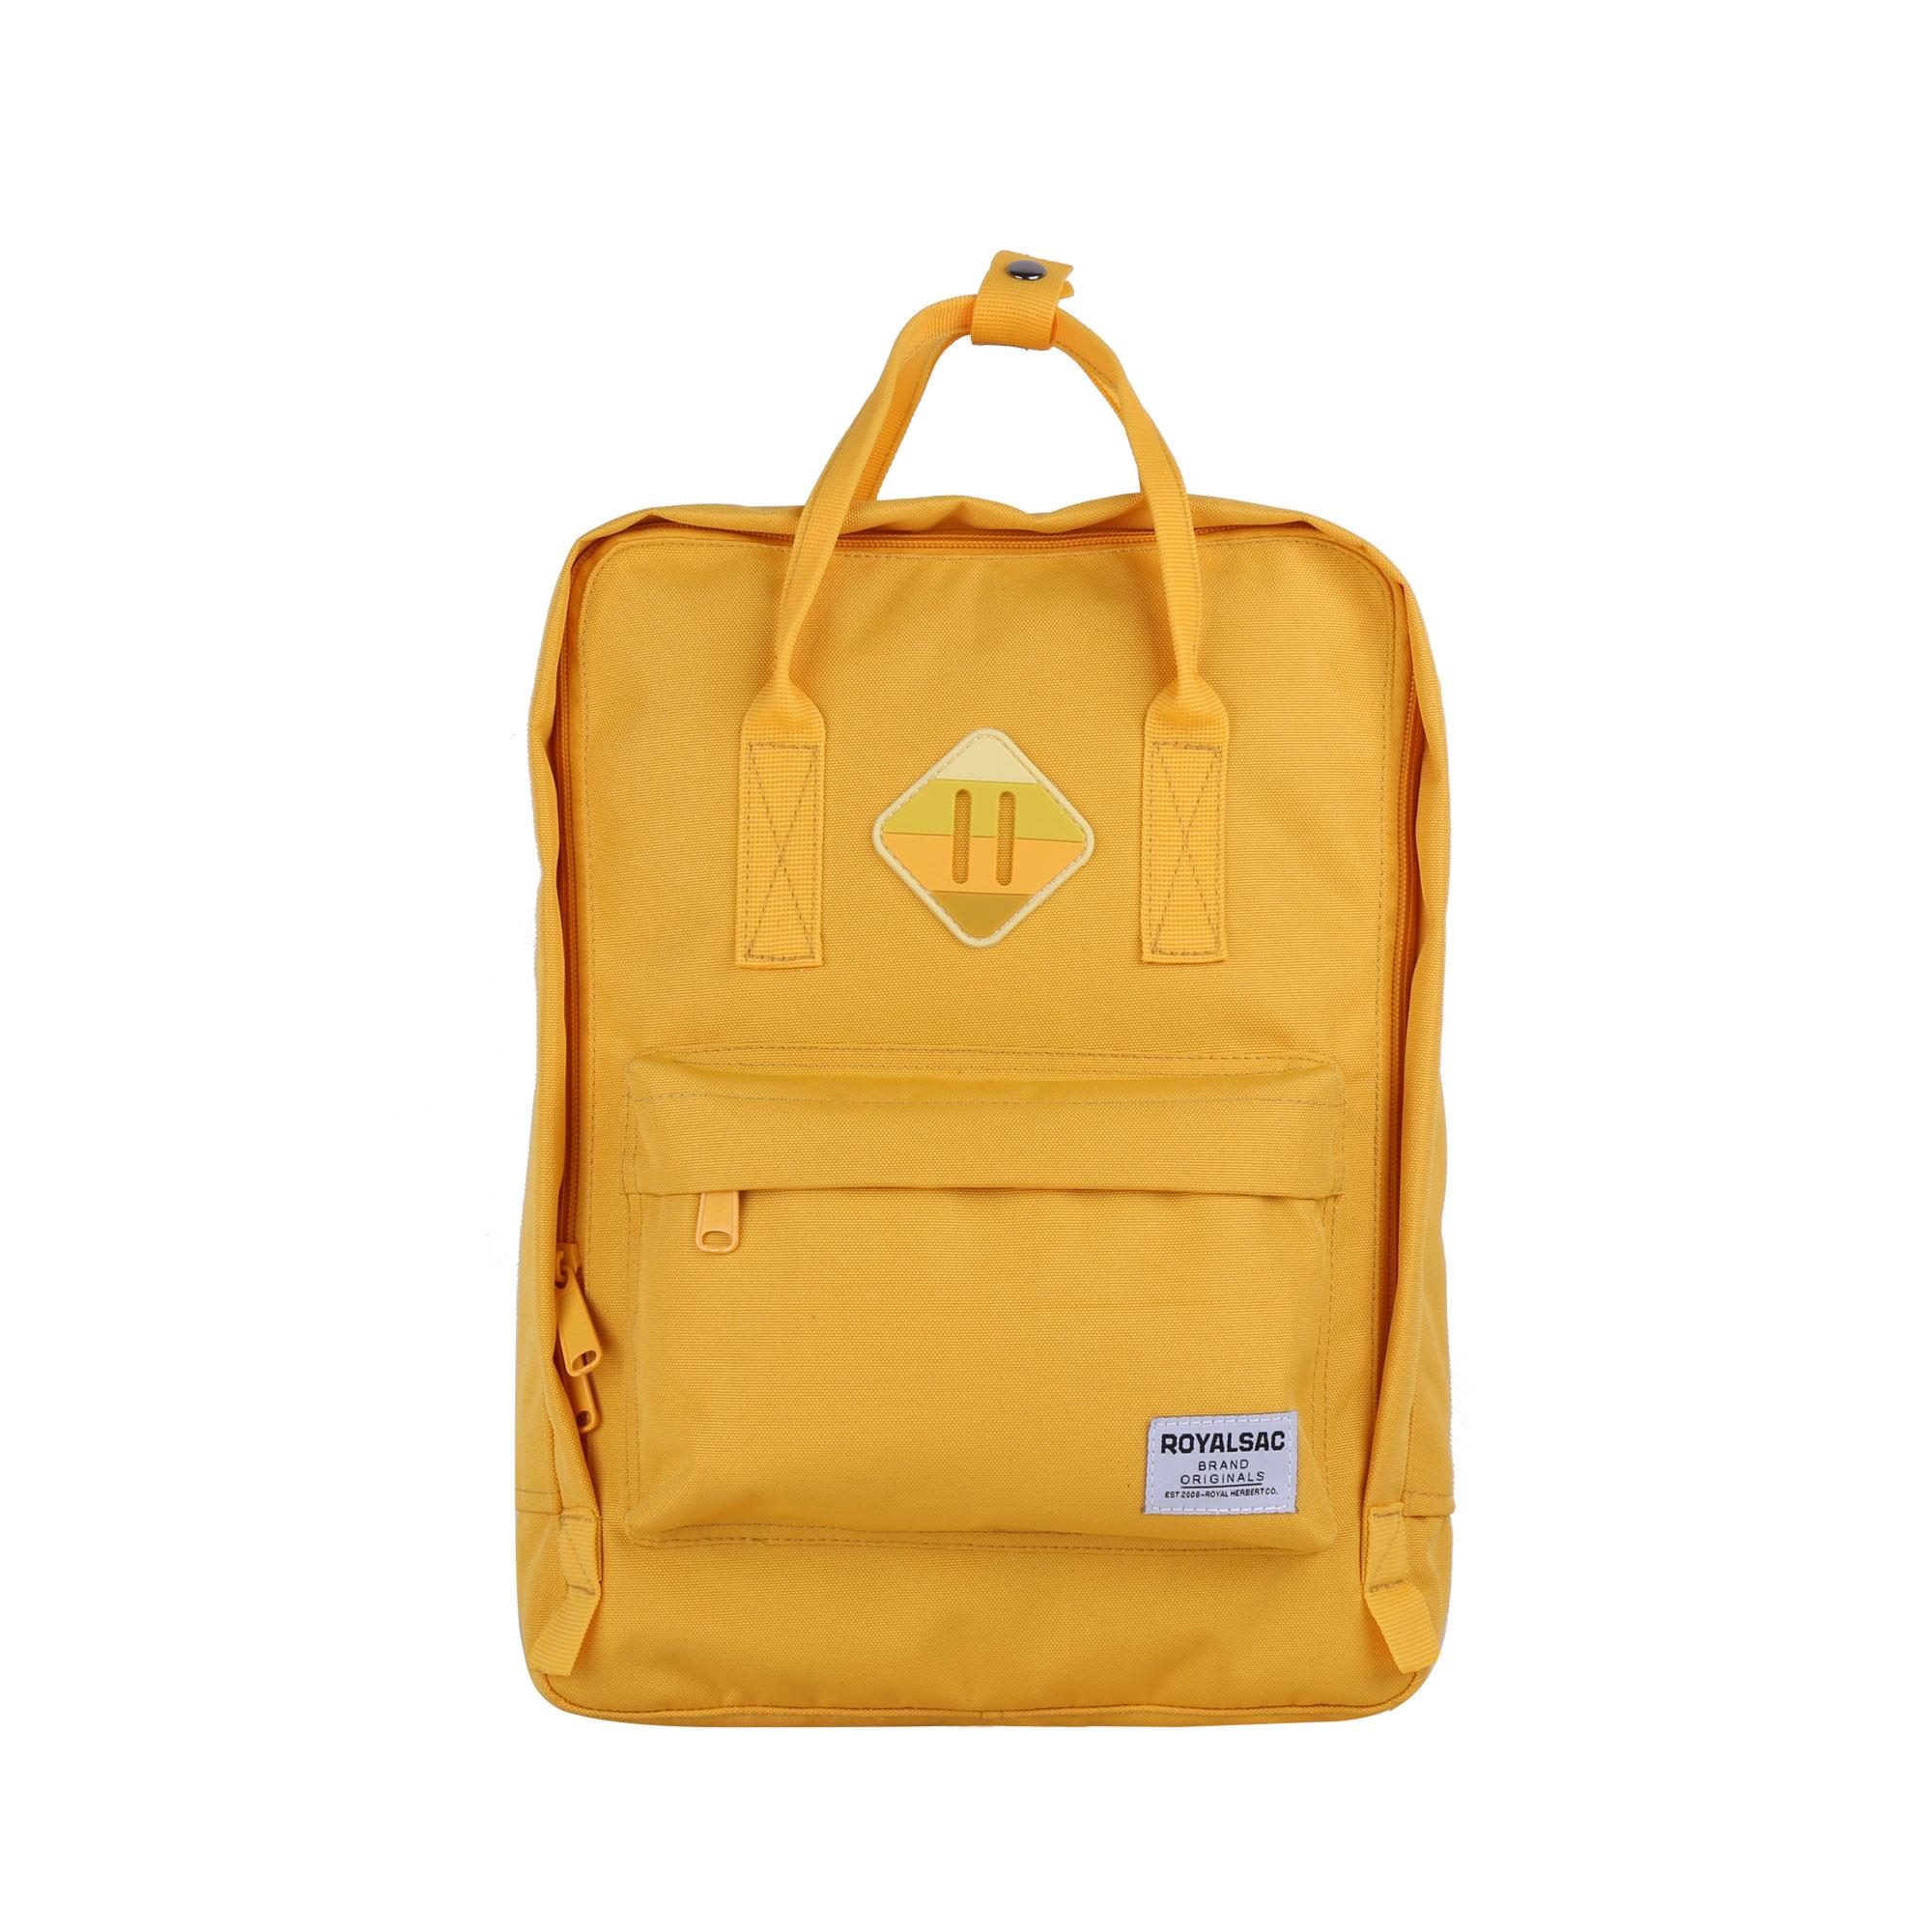 2019 Good Quality Polycoat Backpack Factory -
 B1009-003 – Herbert